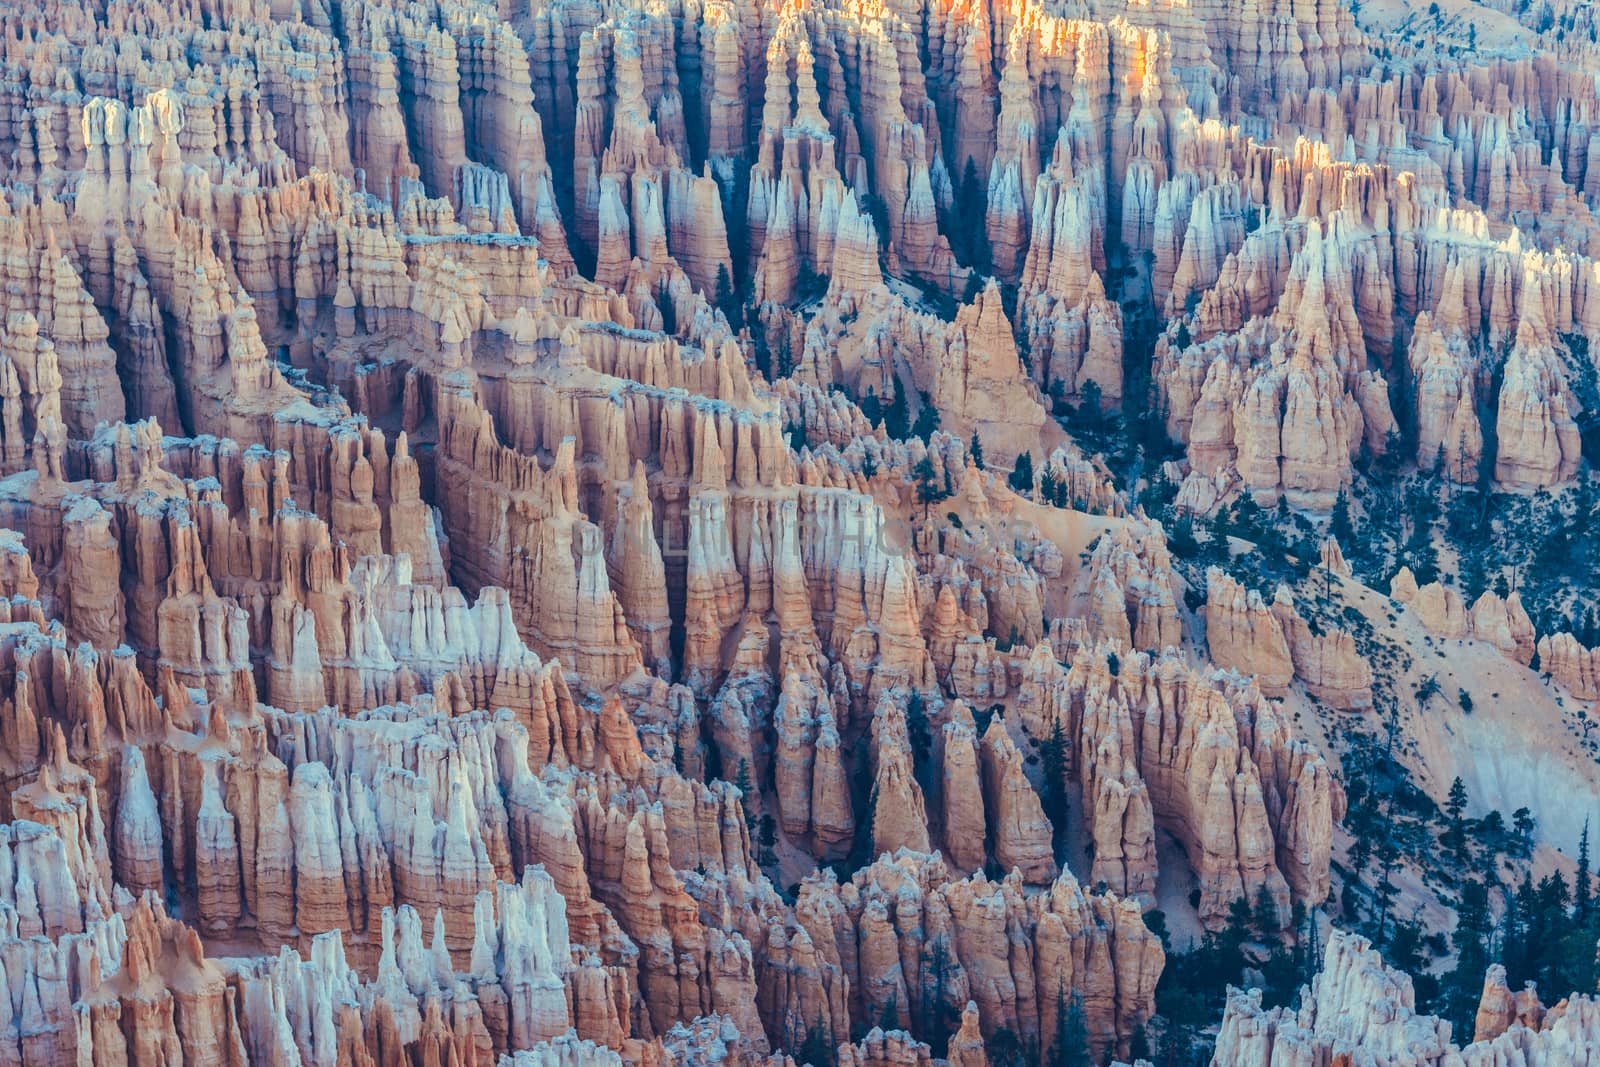 Bryce Canyon National Park, Utah, USA by nicousnake